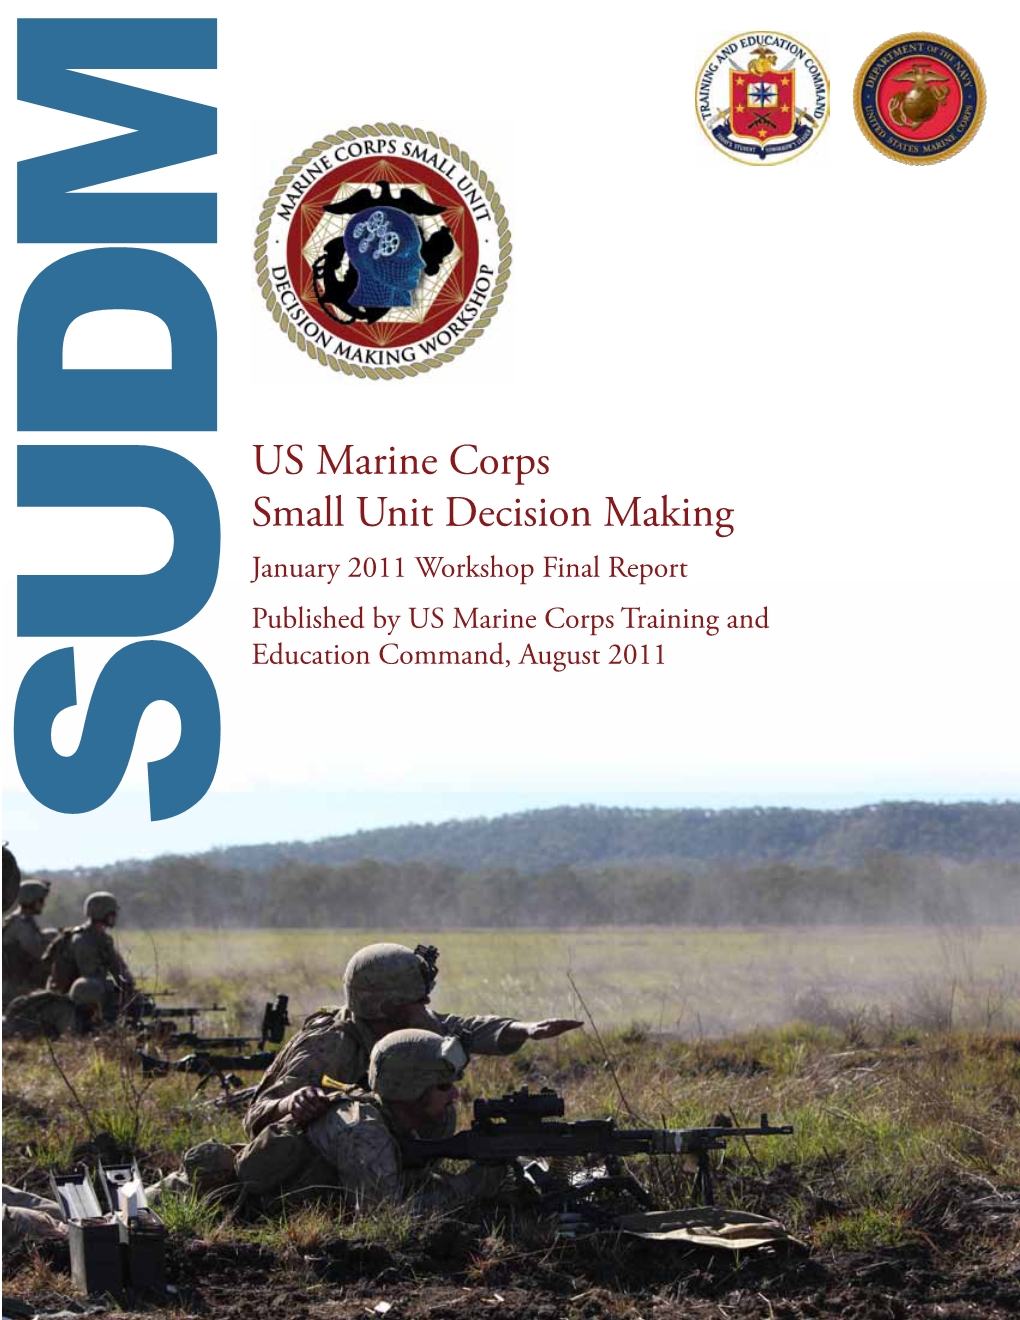 US Marine Corps Small Unit Decision Making